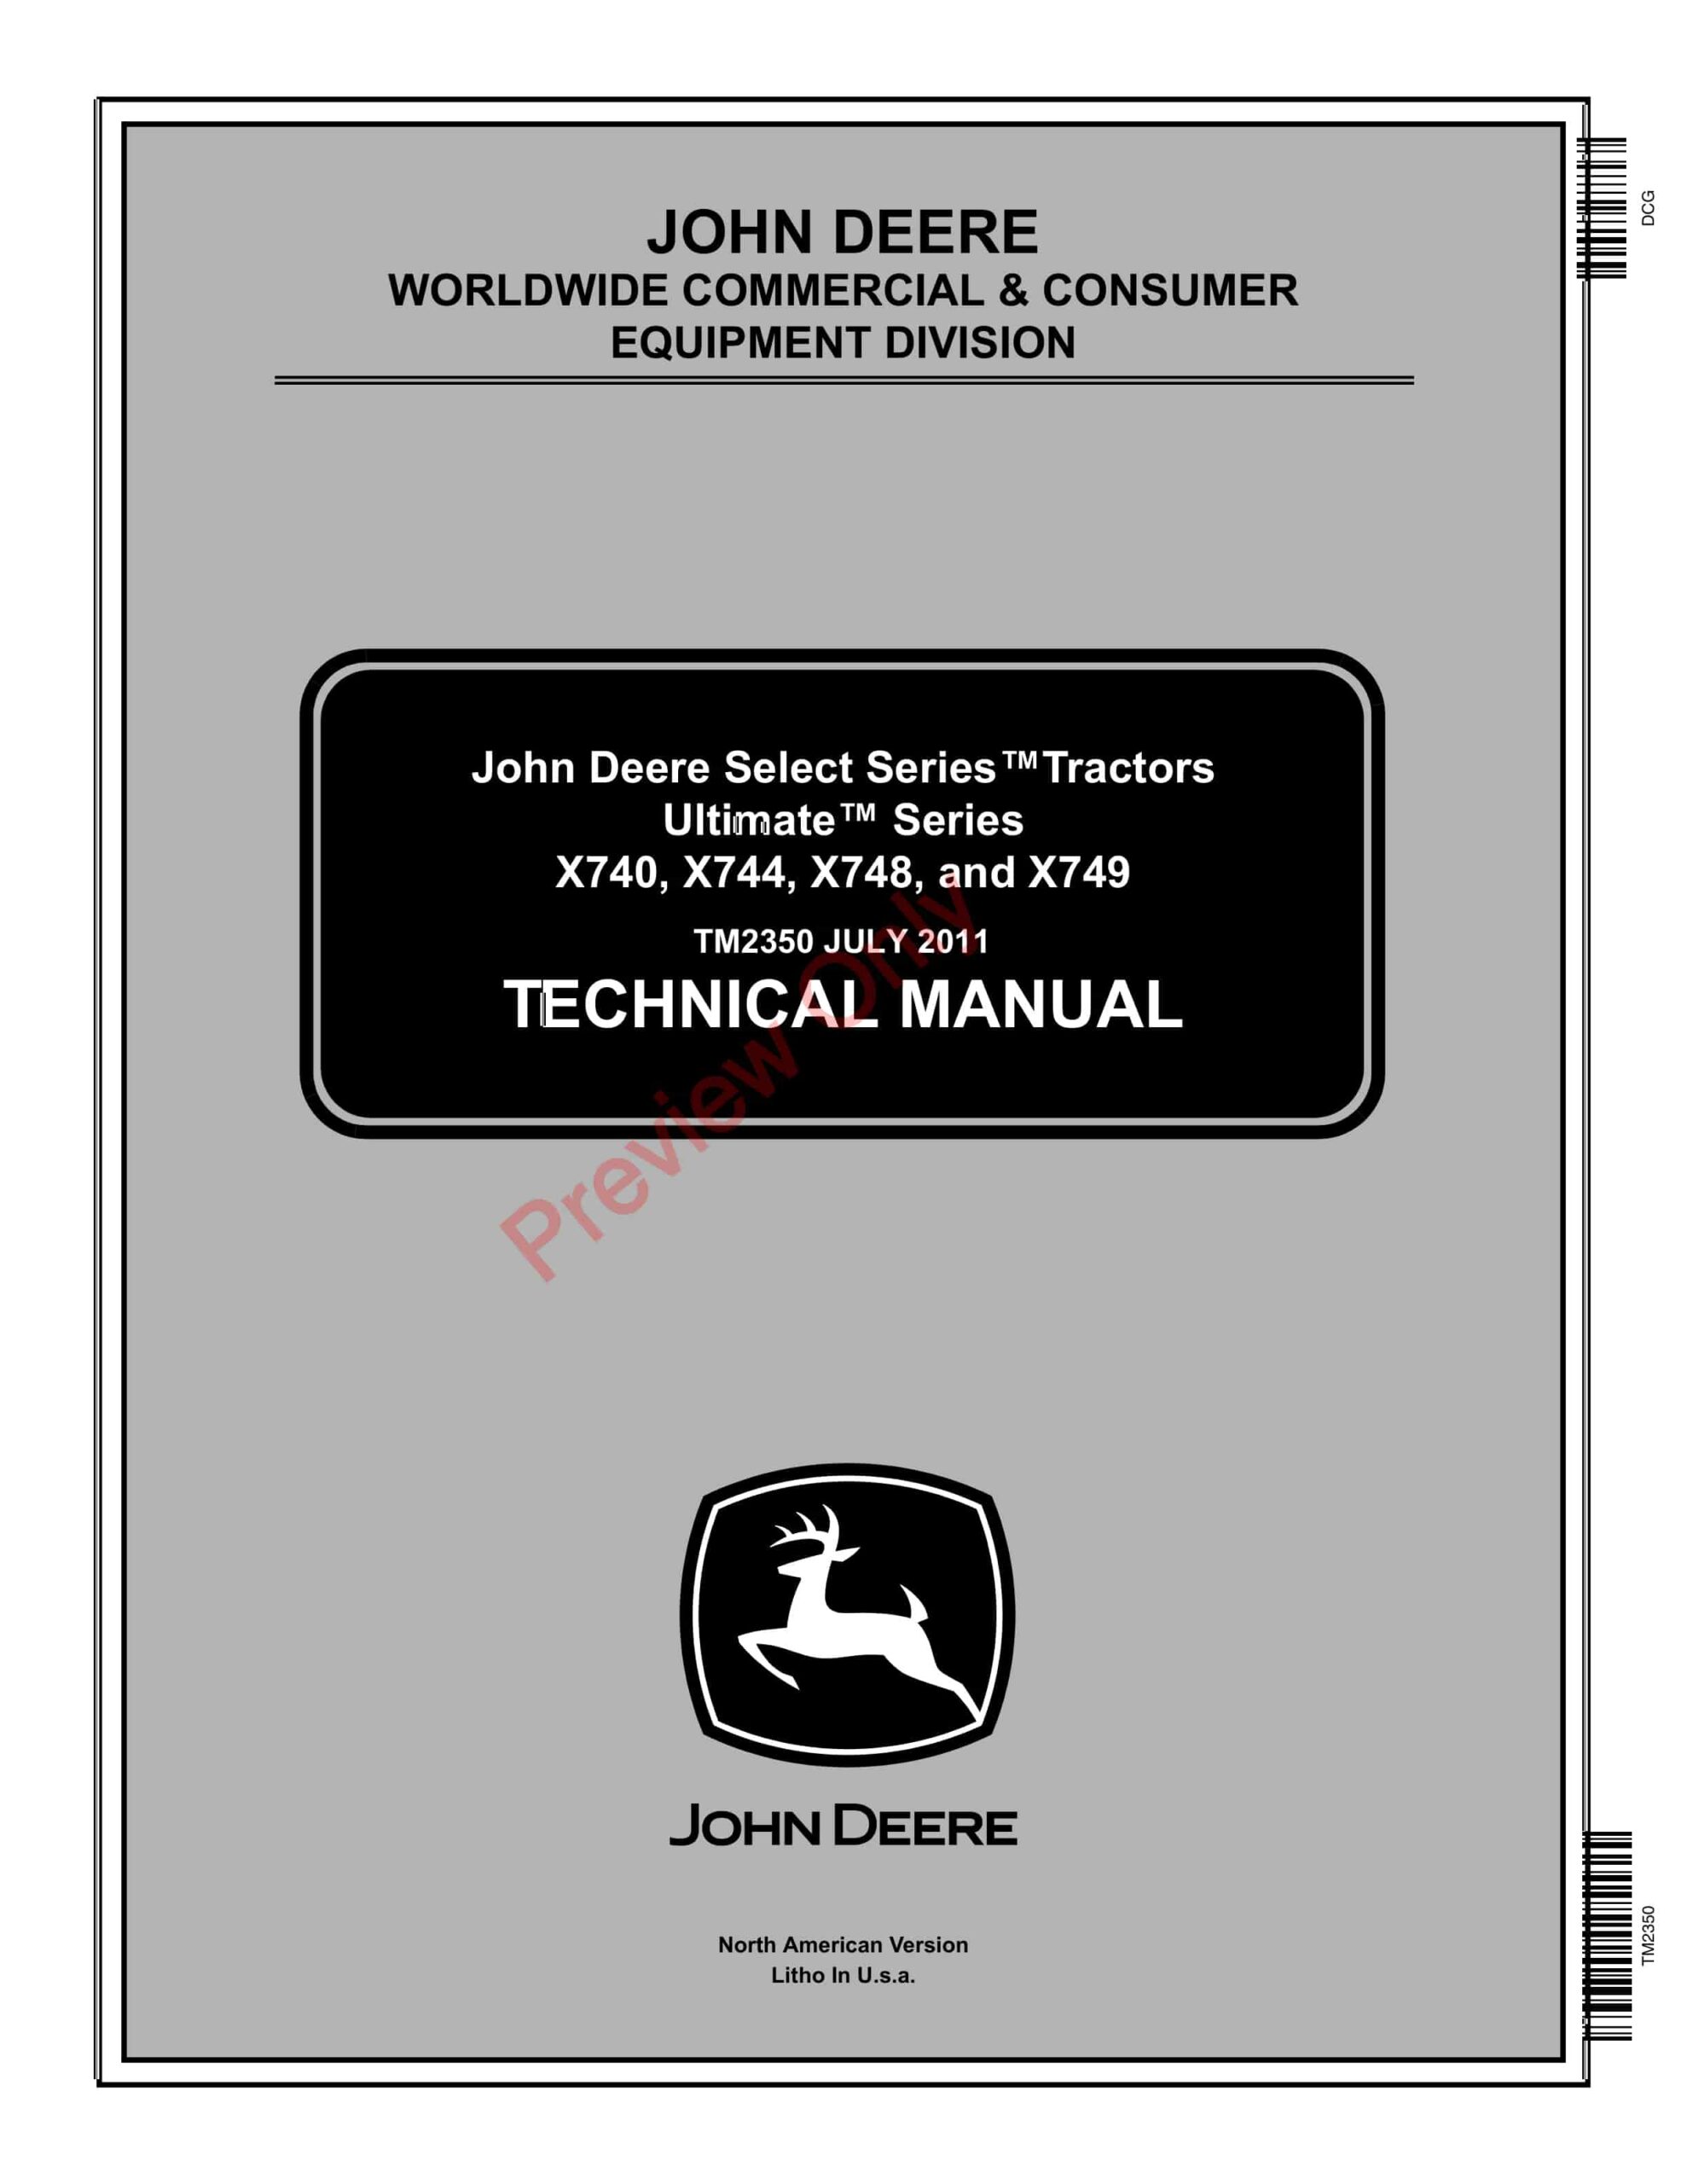 John Deere X740, X744, X748, X749Select Series Tractors (060001-) Technical Manual TM2350 01JUL11-1